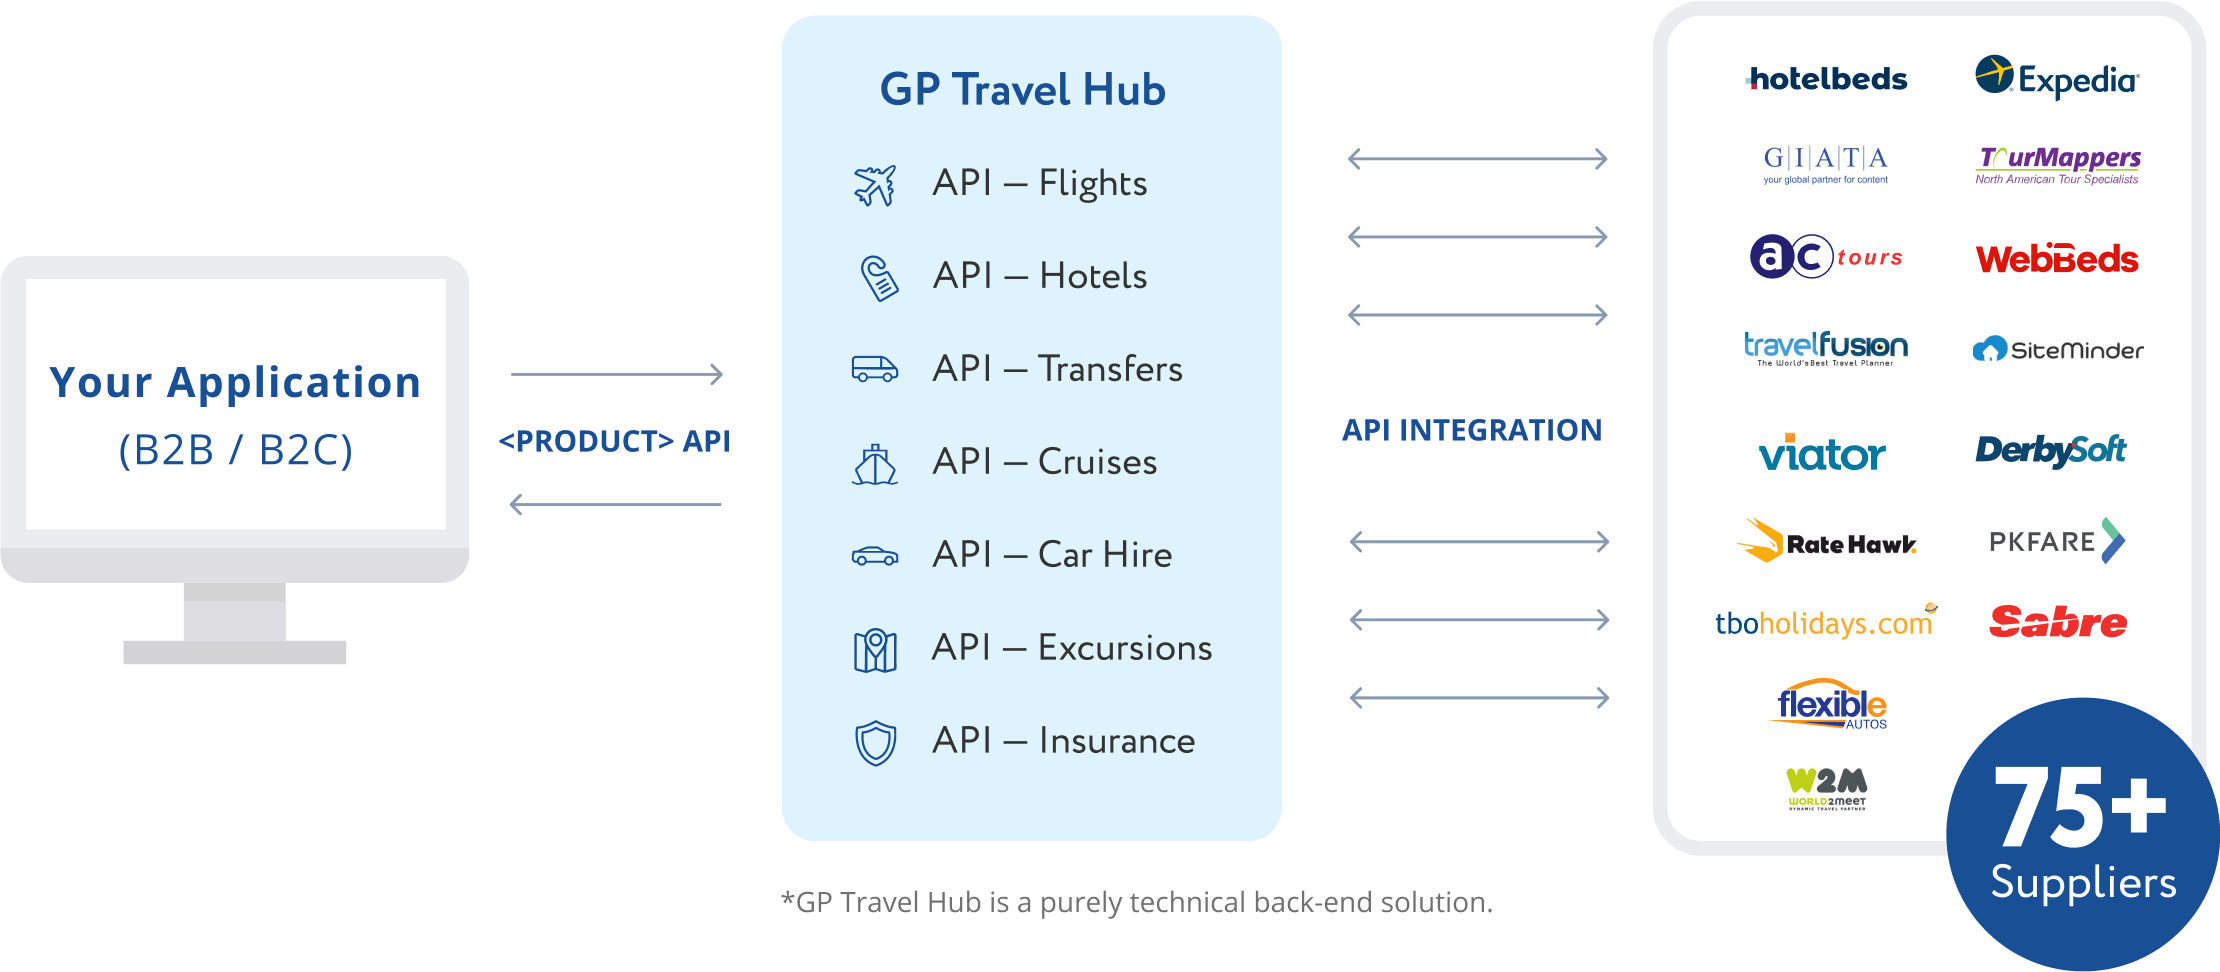 GP Travel Hub structure